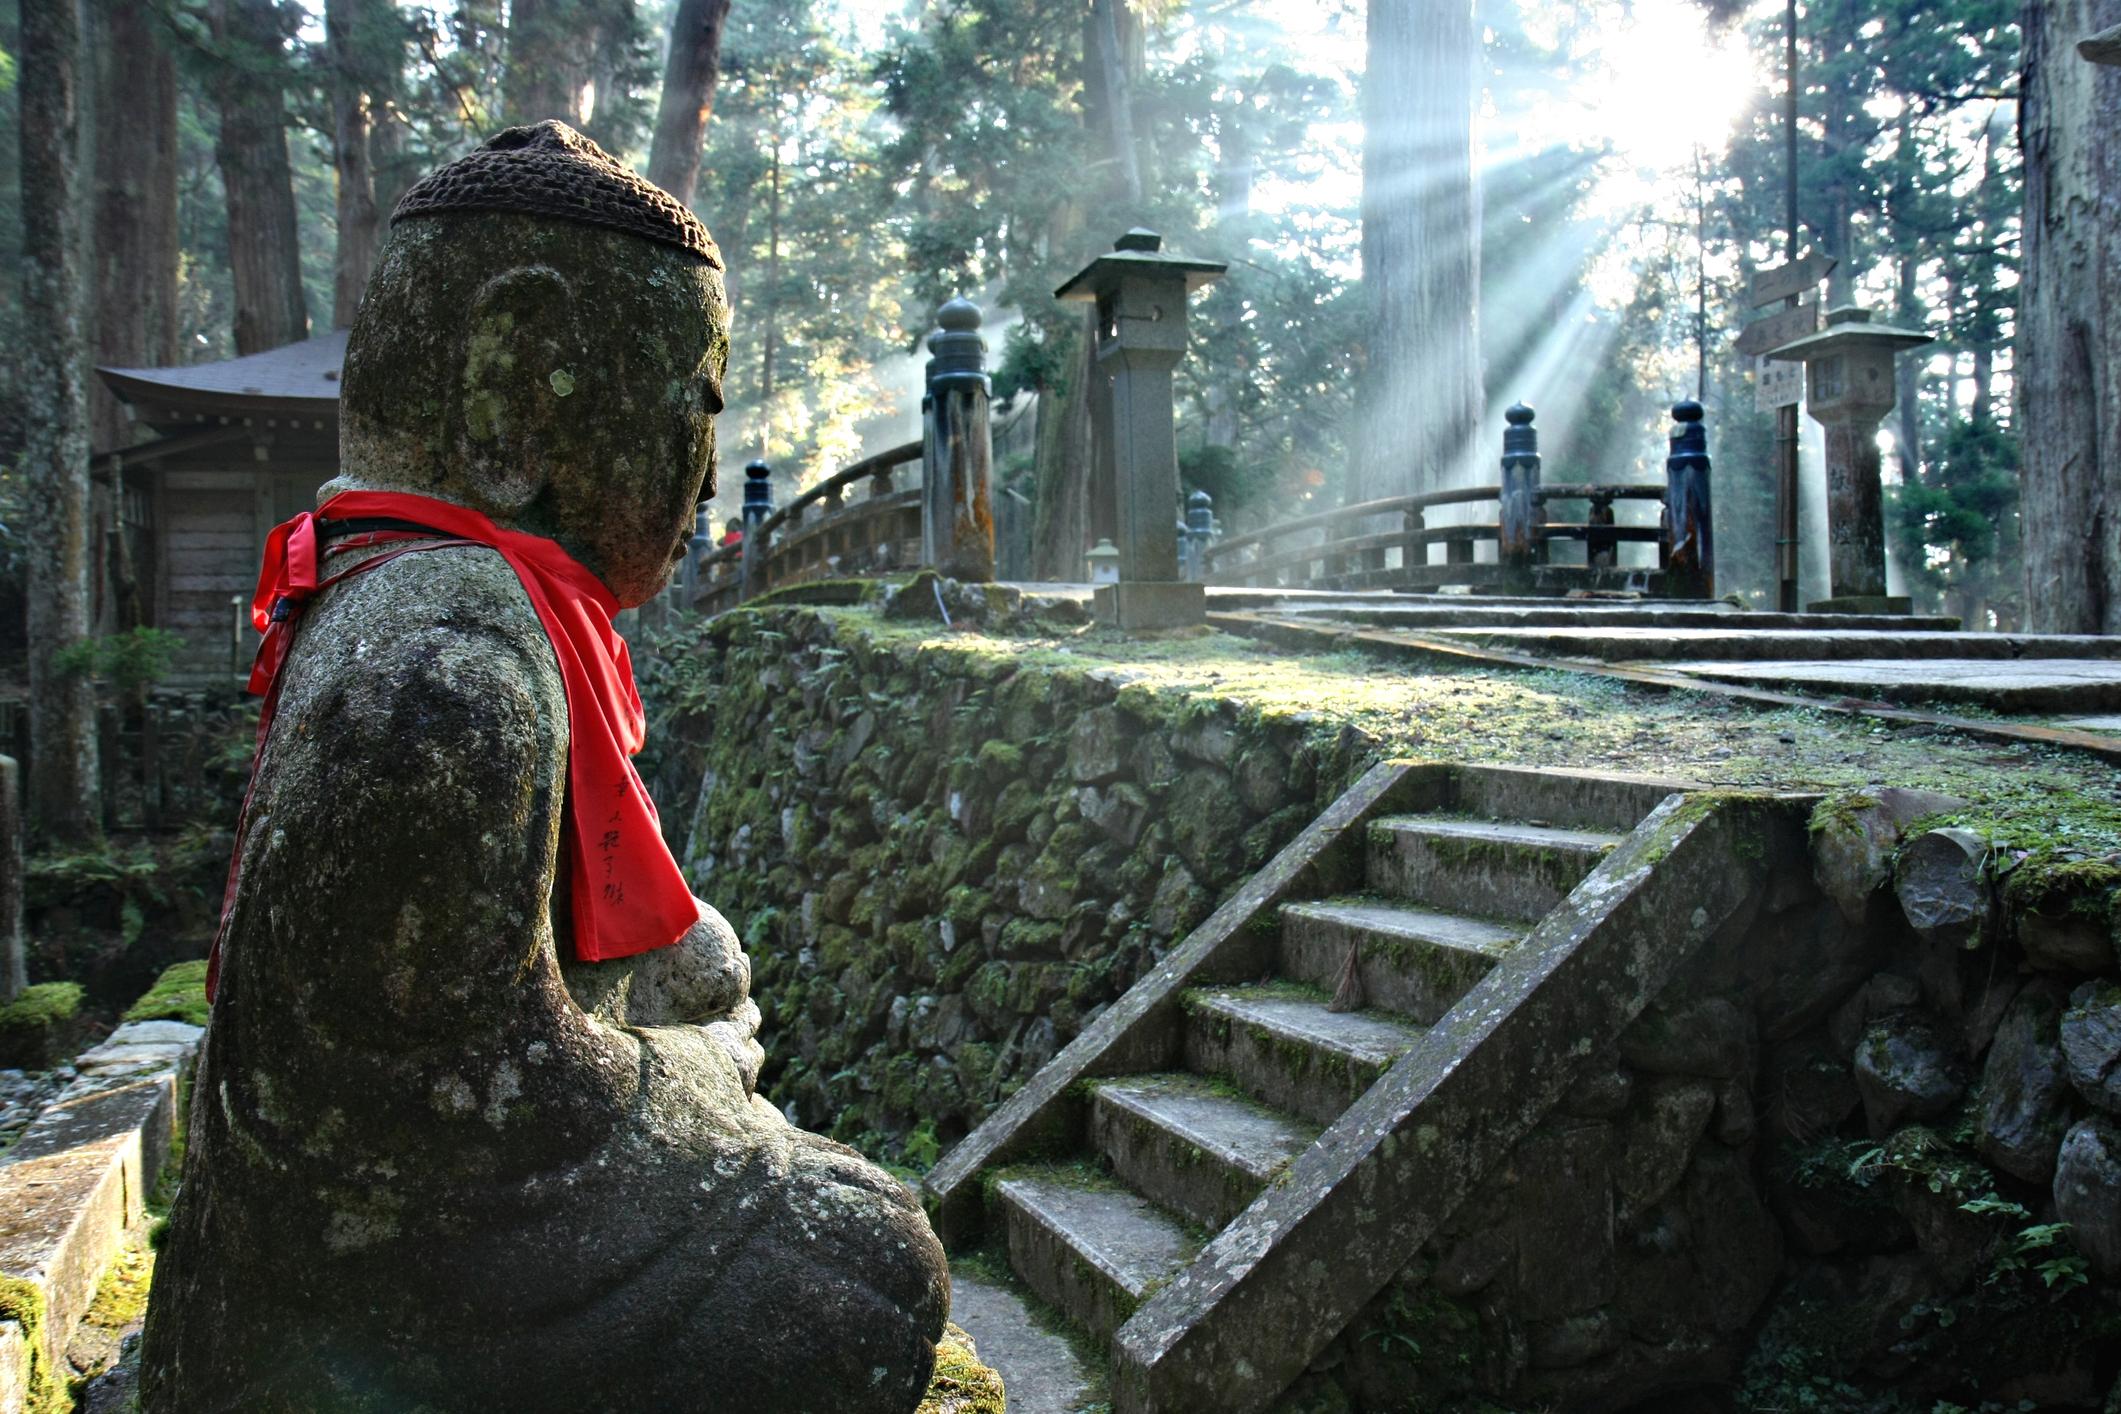 The Ancient Pilgrim Trails Through Japan's Sacred Mountains